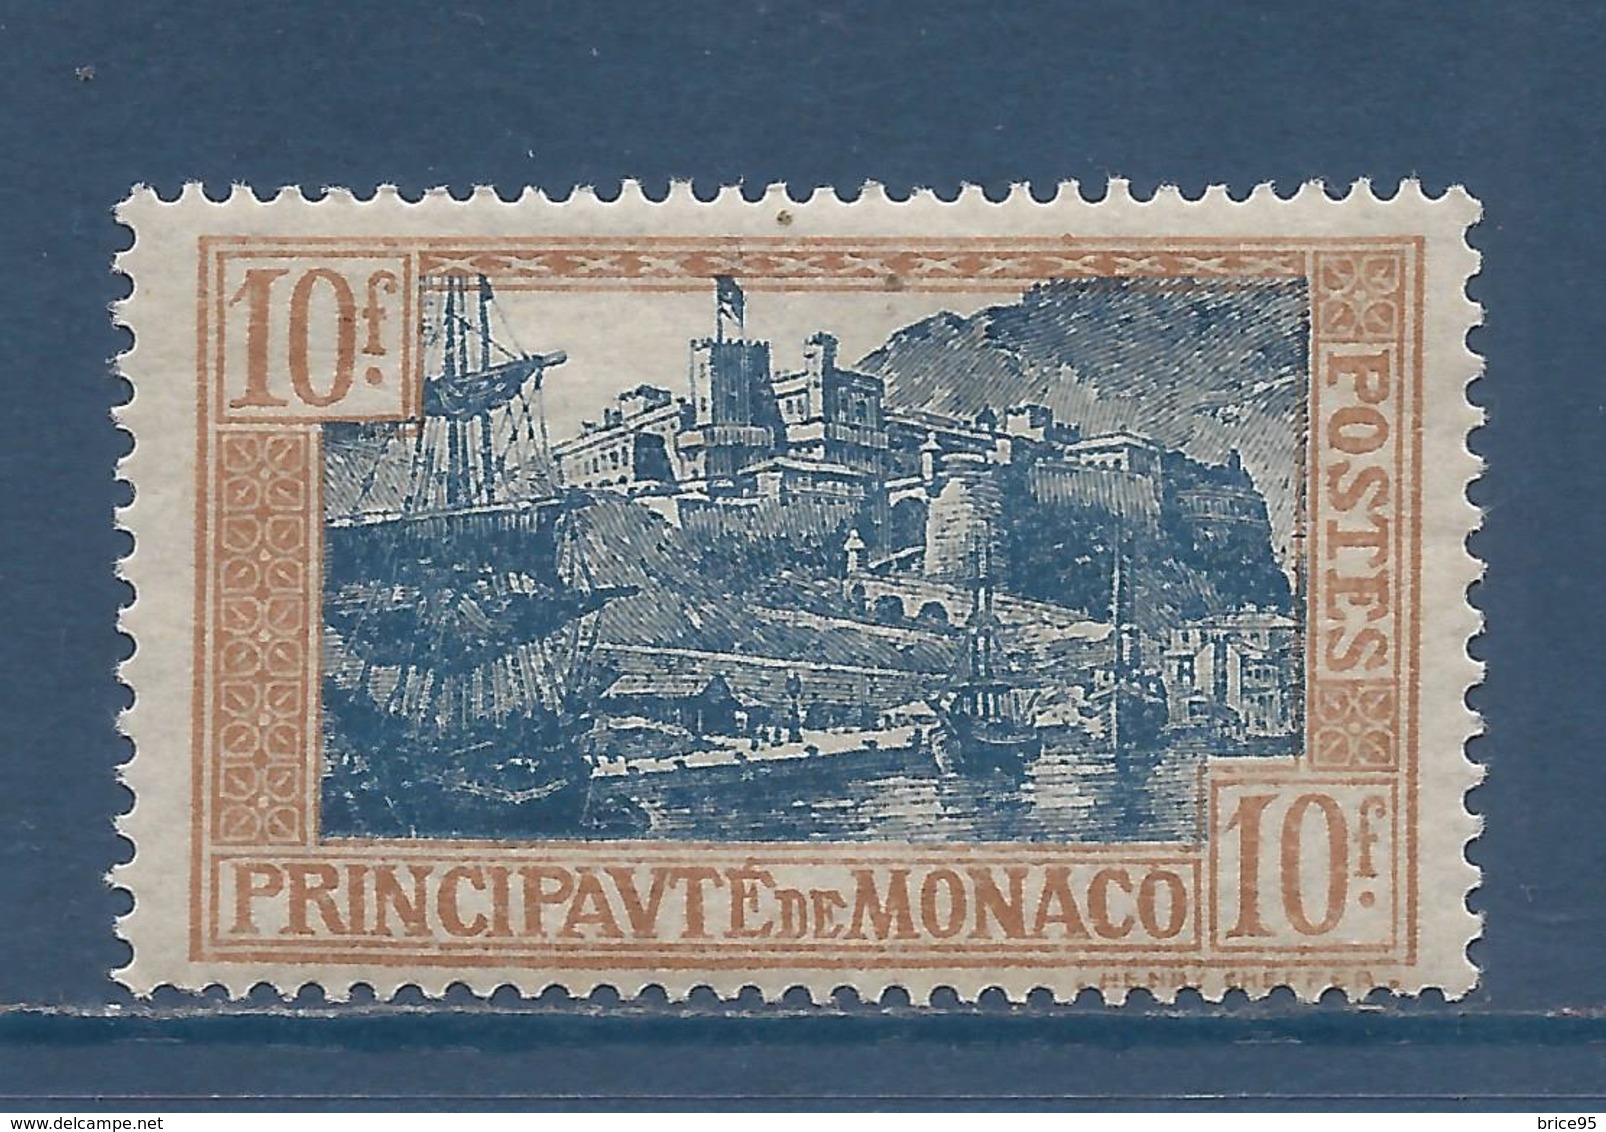 Monaco - YT N° 103 - Neuf Avec Charnière - 1924 à 1933 - Neufs